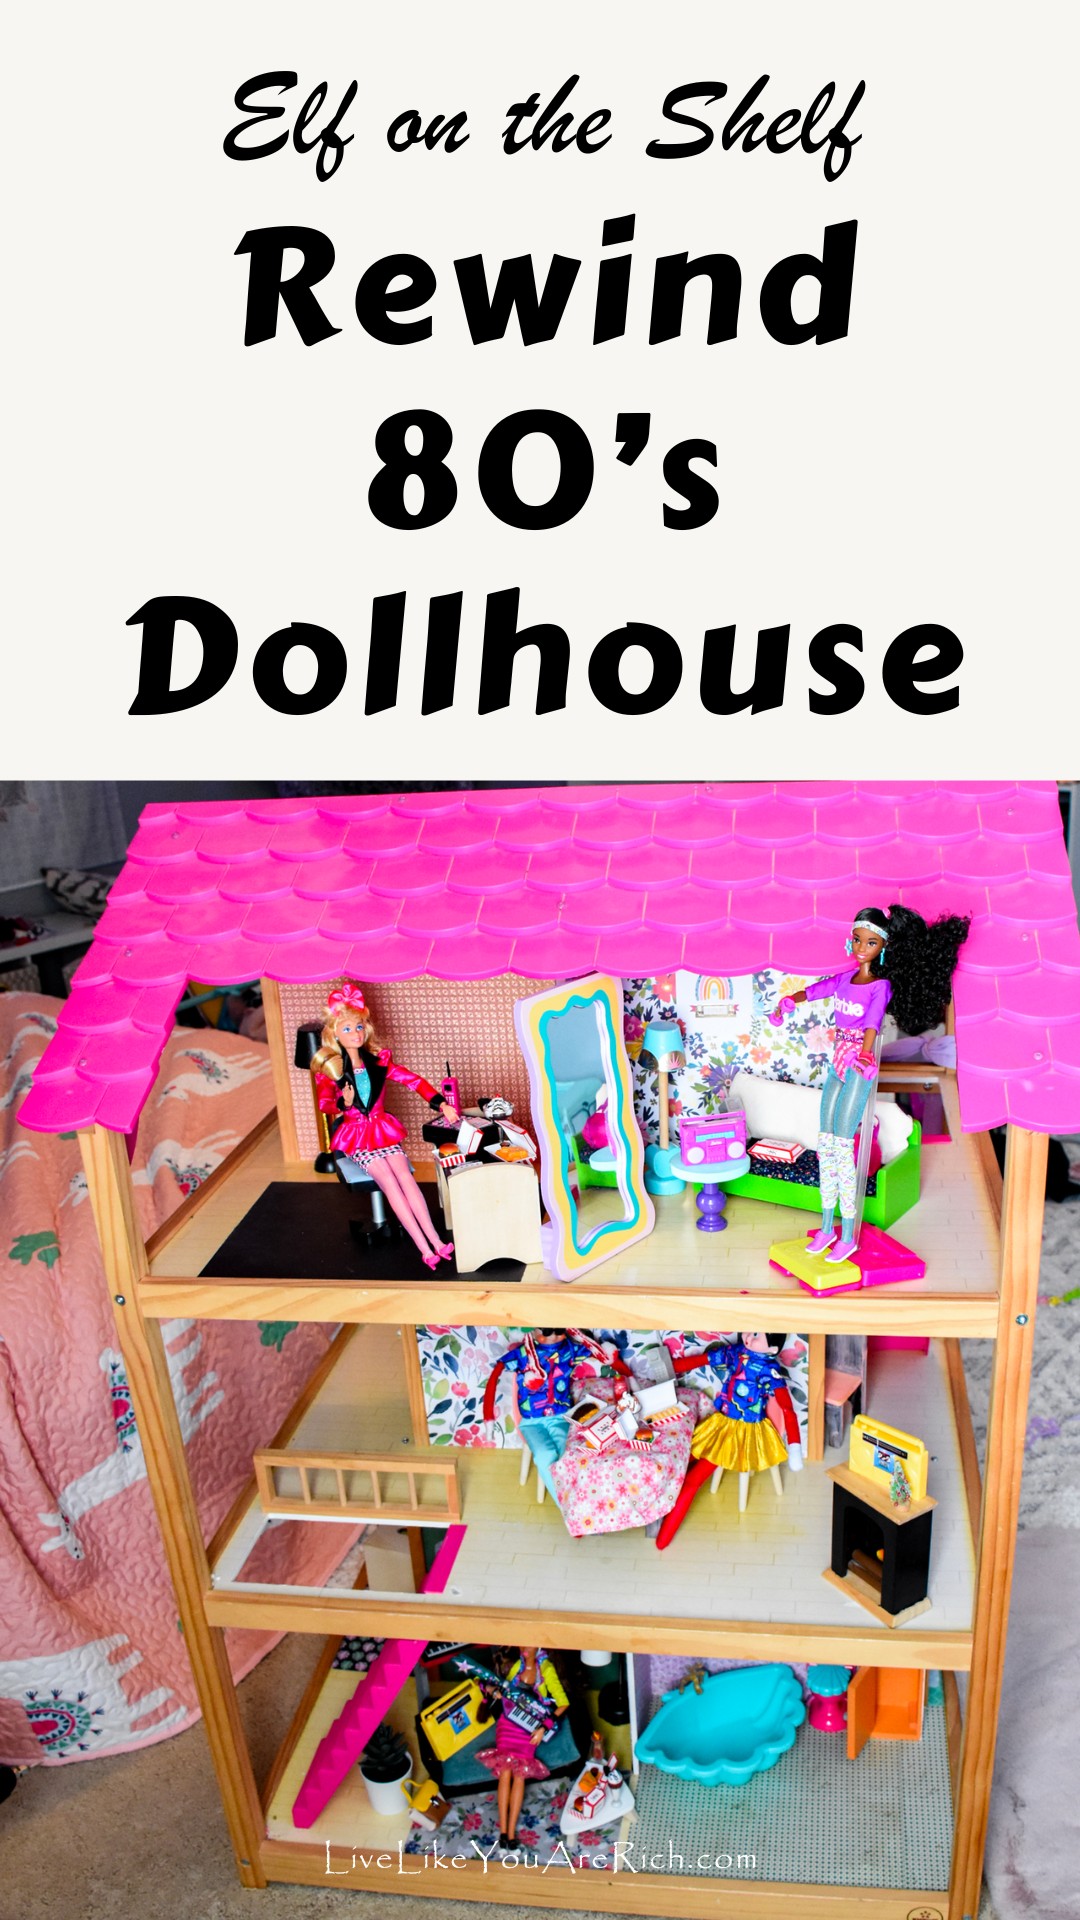 Elf on the Shelf: Rewind 80's Dollhouse